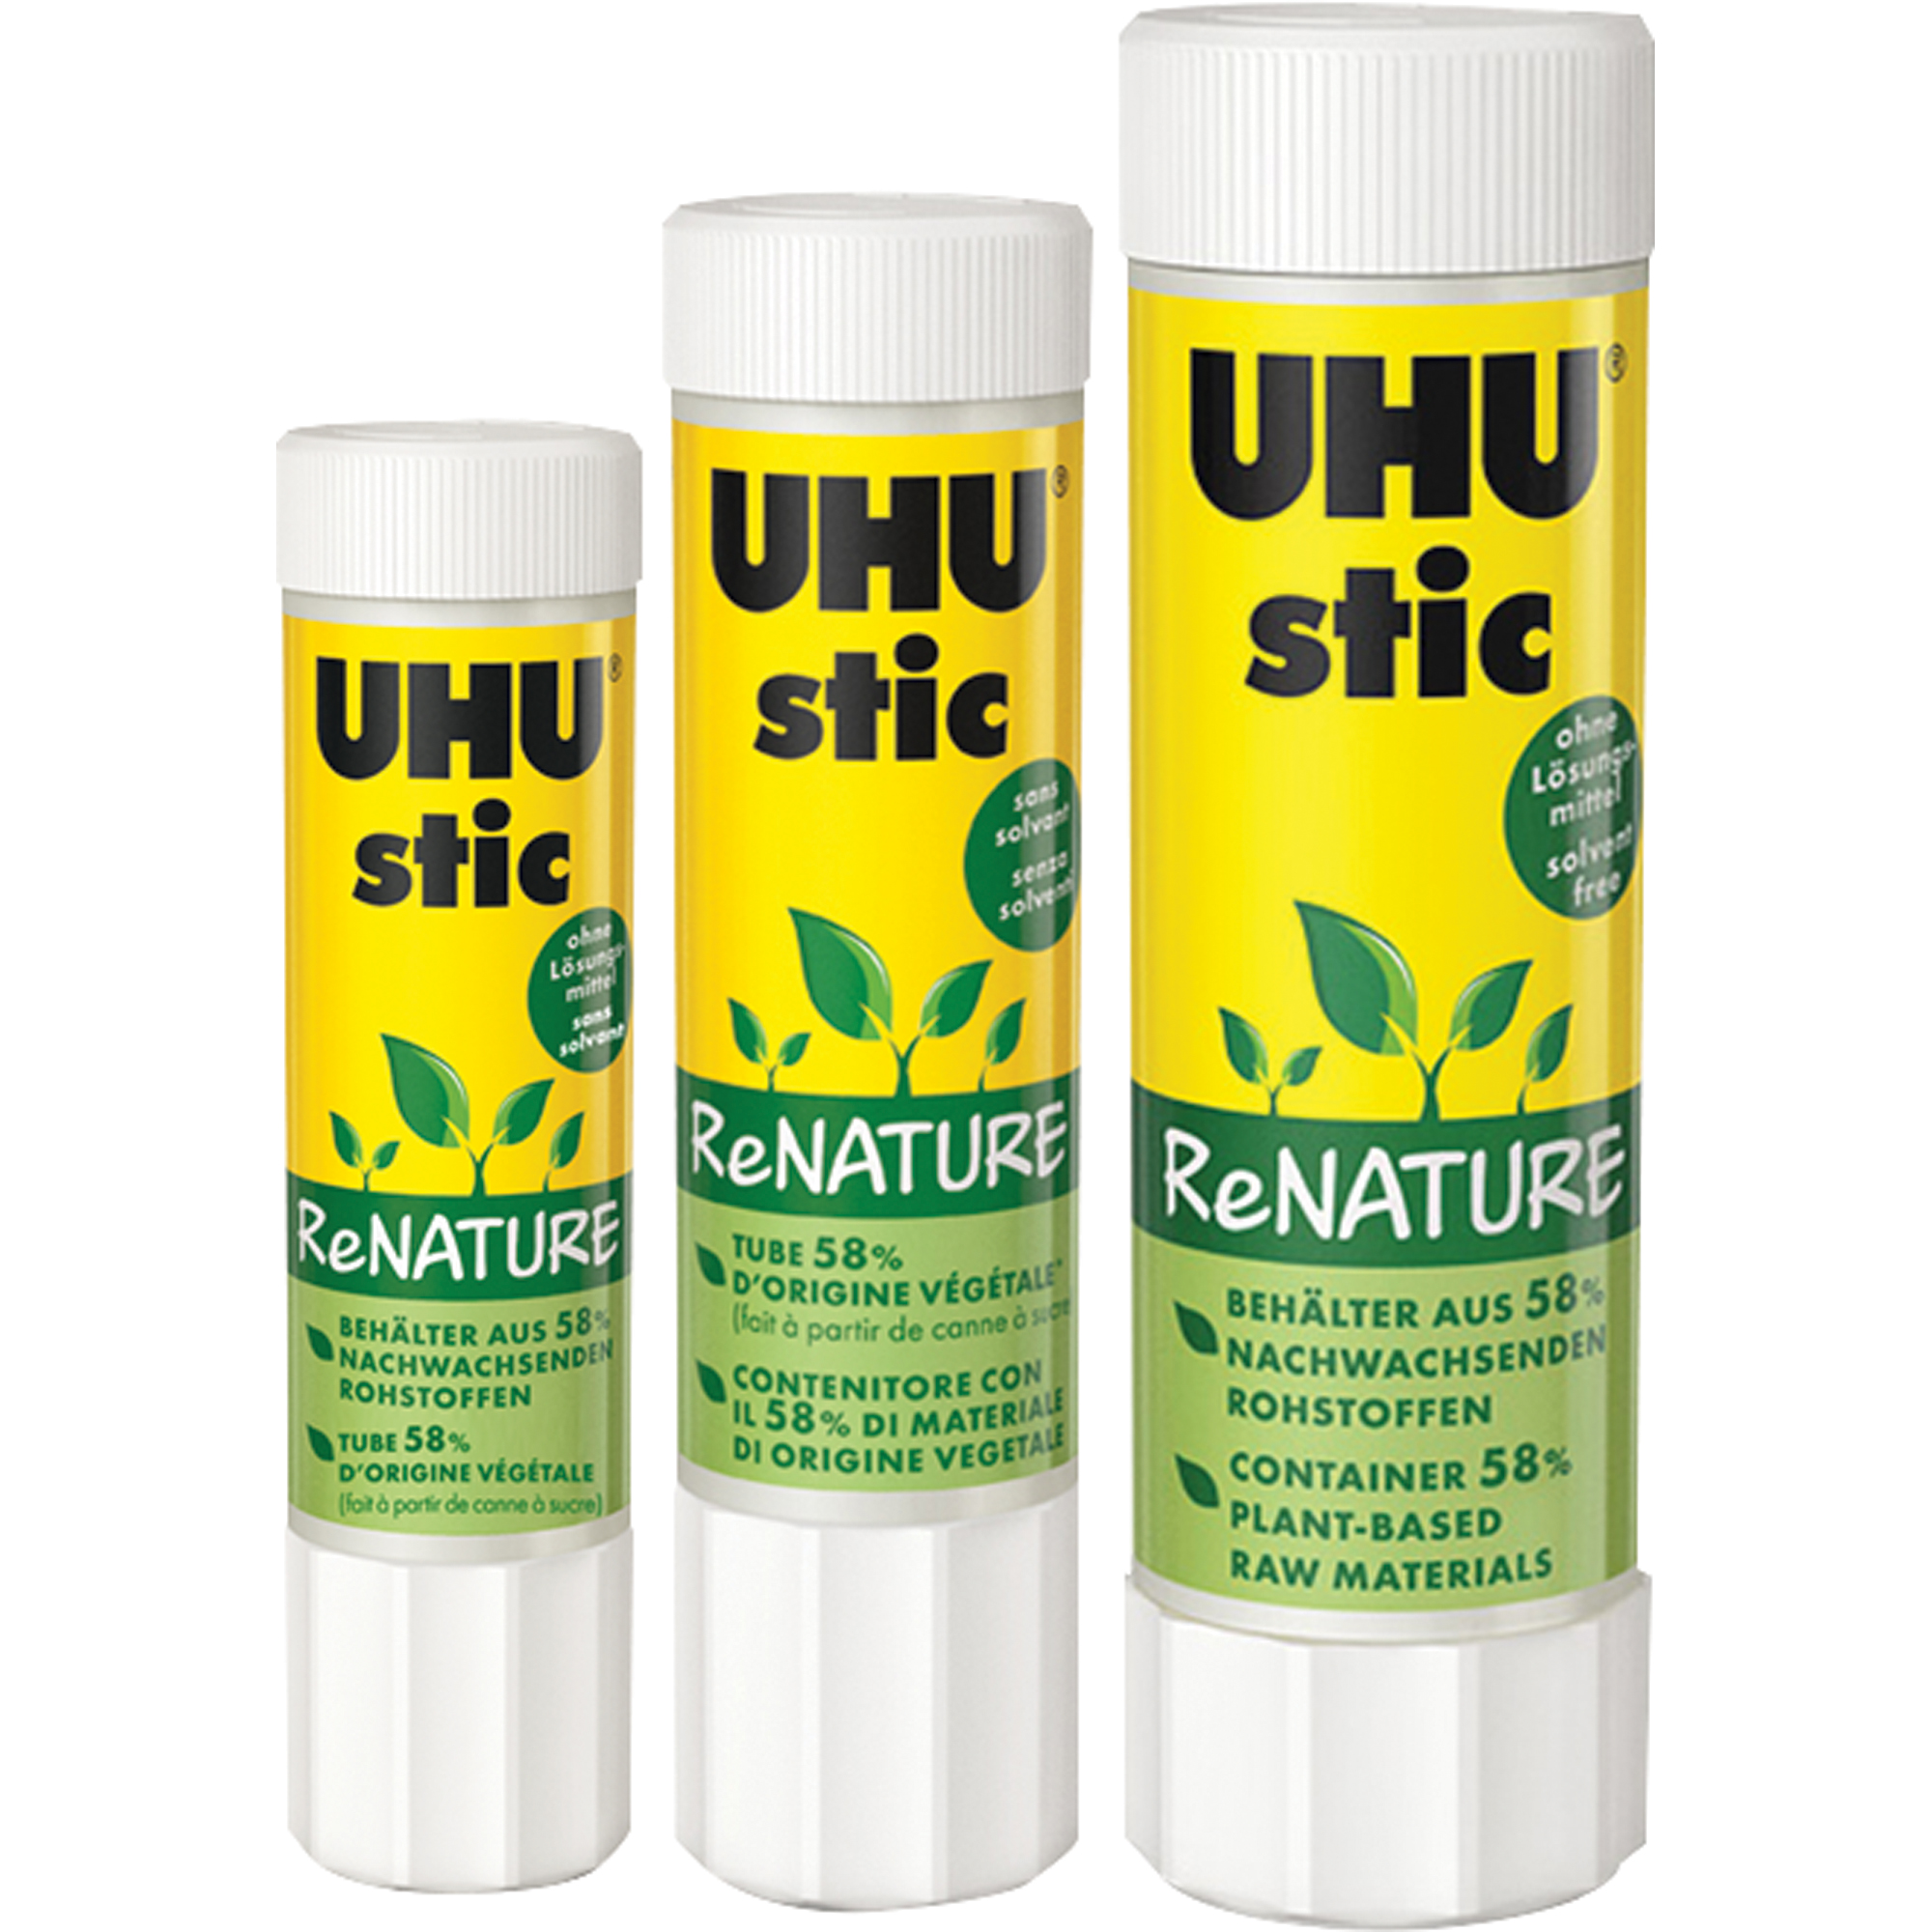 UHU® Klebestift stic ReNATURE 40 g